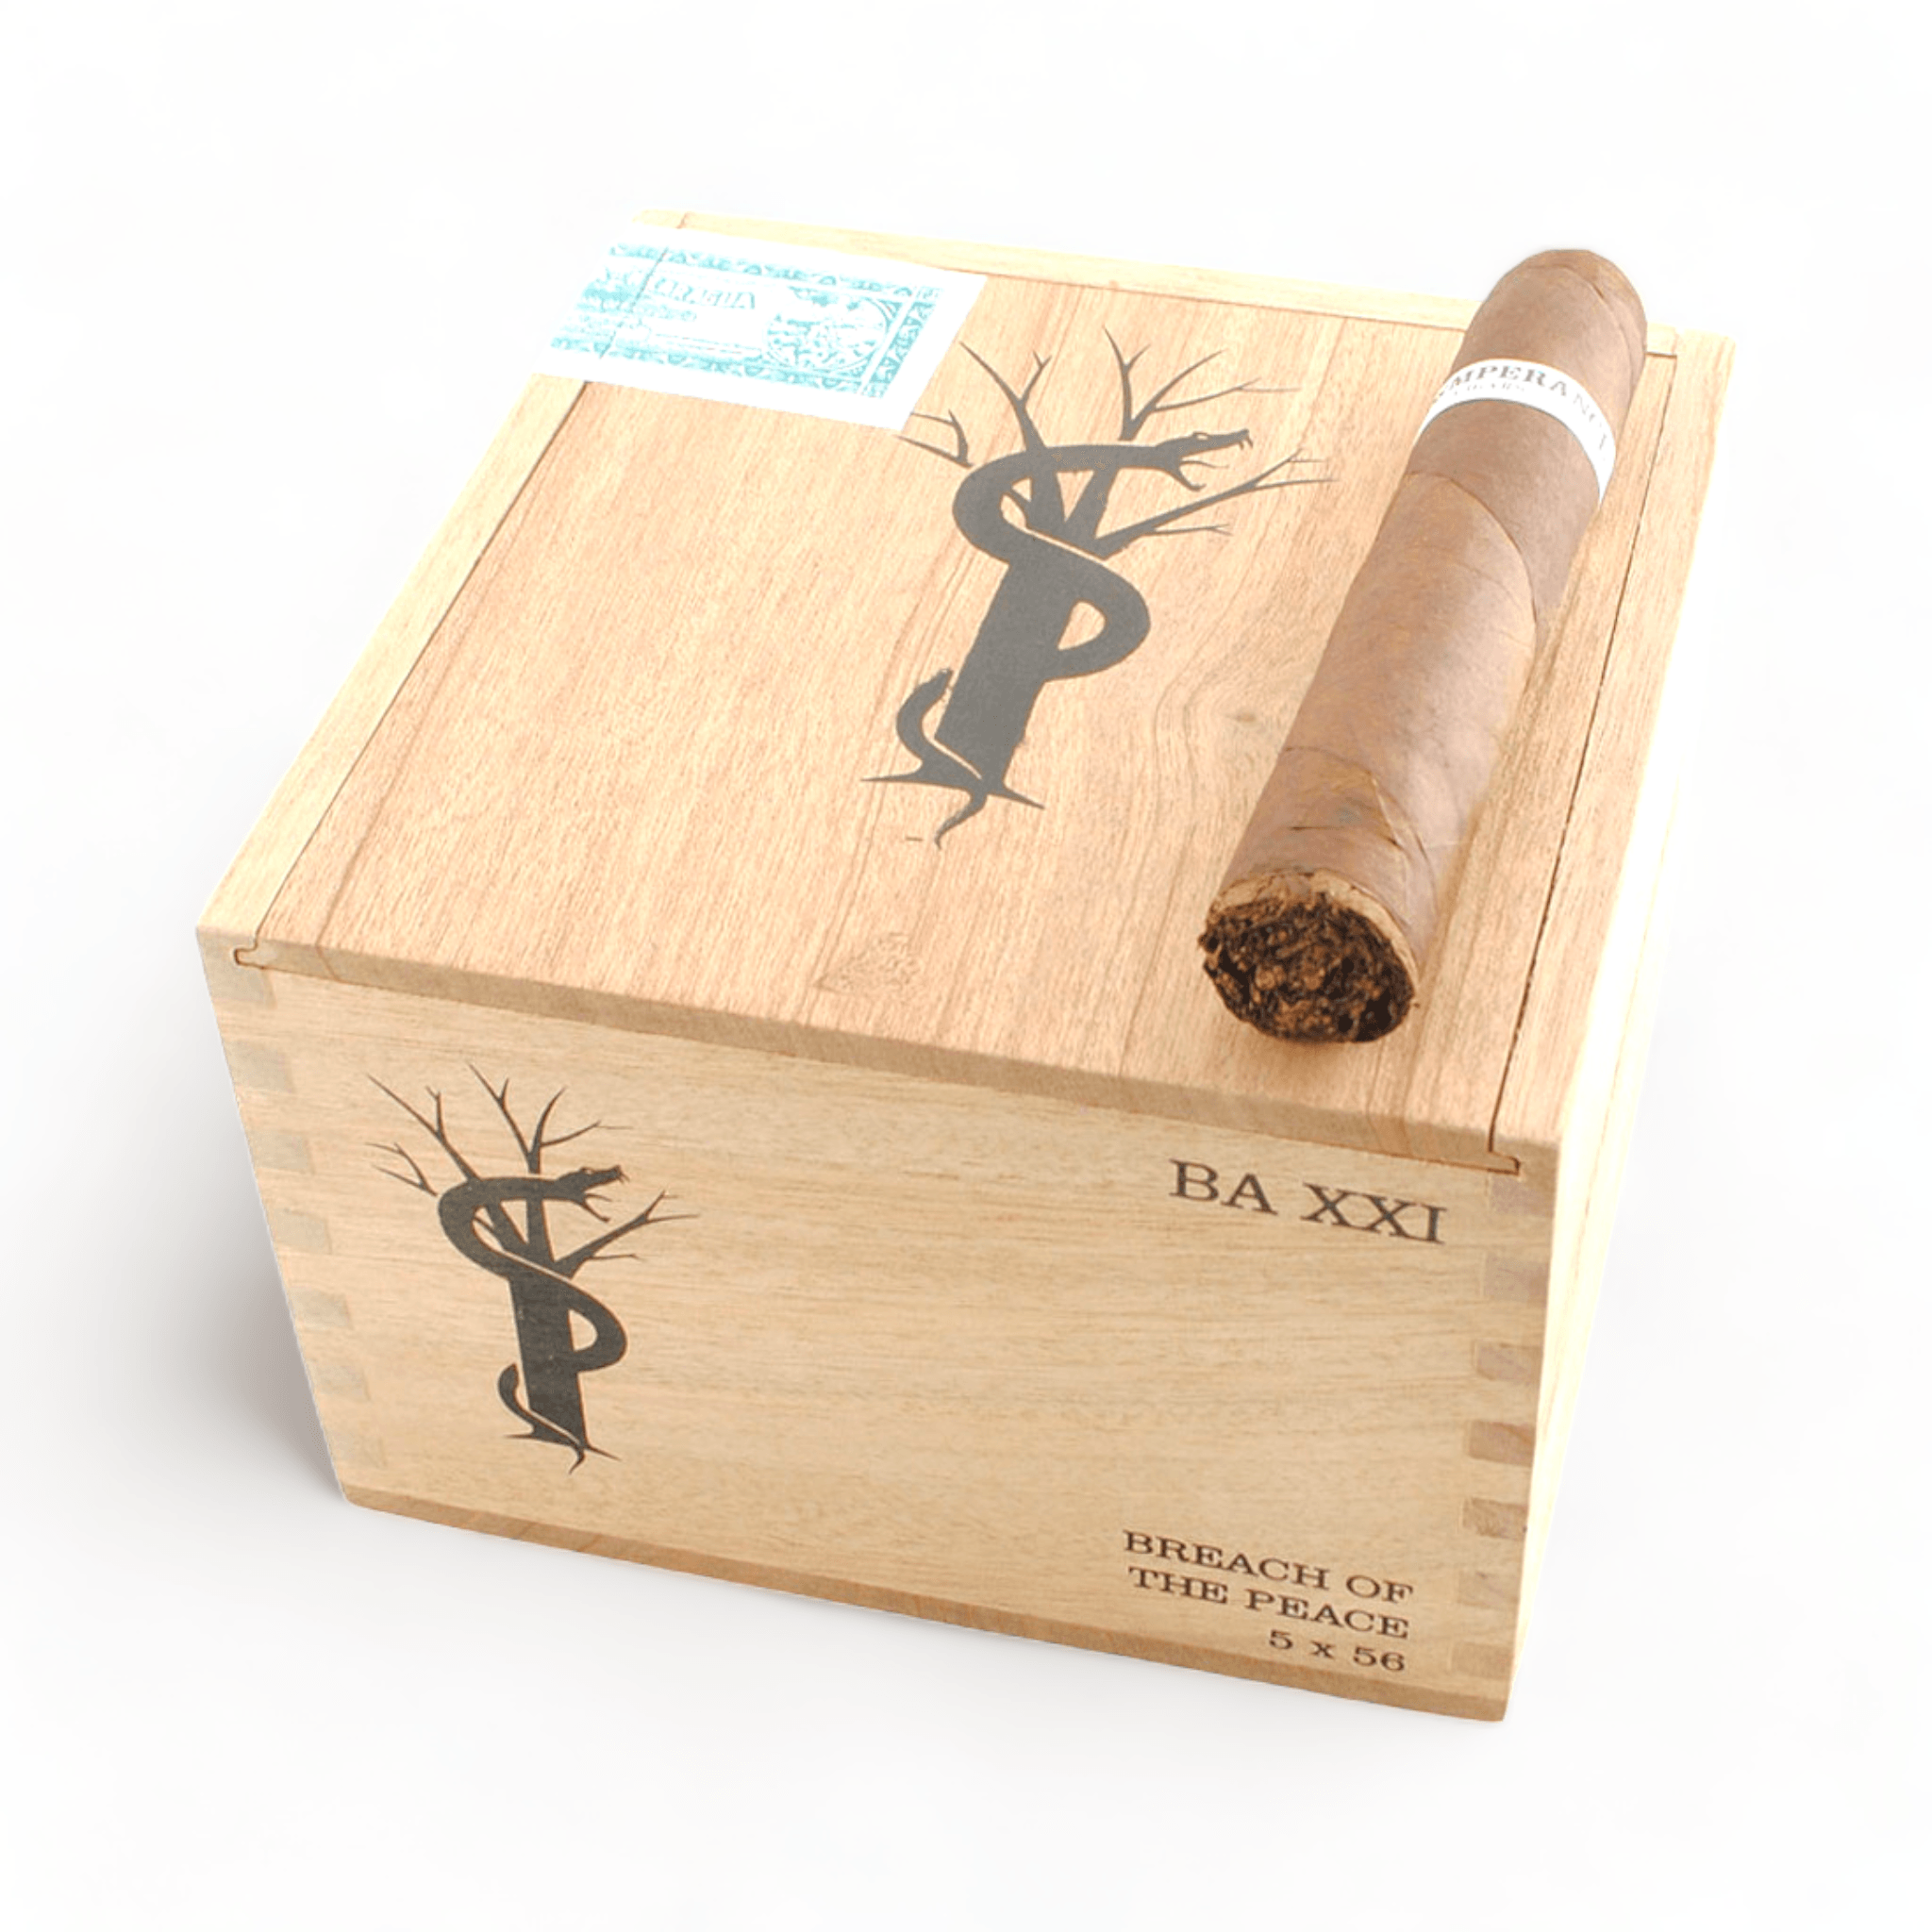 Roma Craft Cigars | Intemperance BA XXI Breach Of The Peace 5 x 56 | Box of 24 - hk.cohcigars